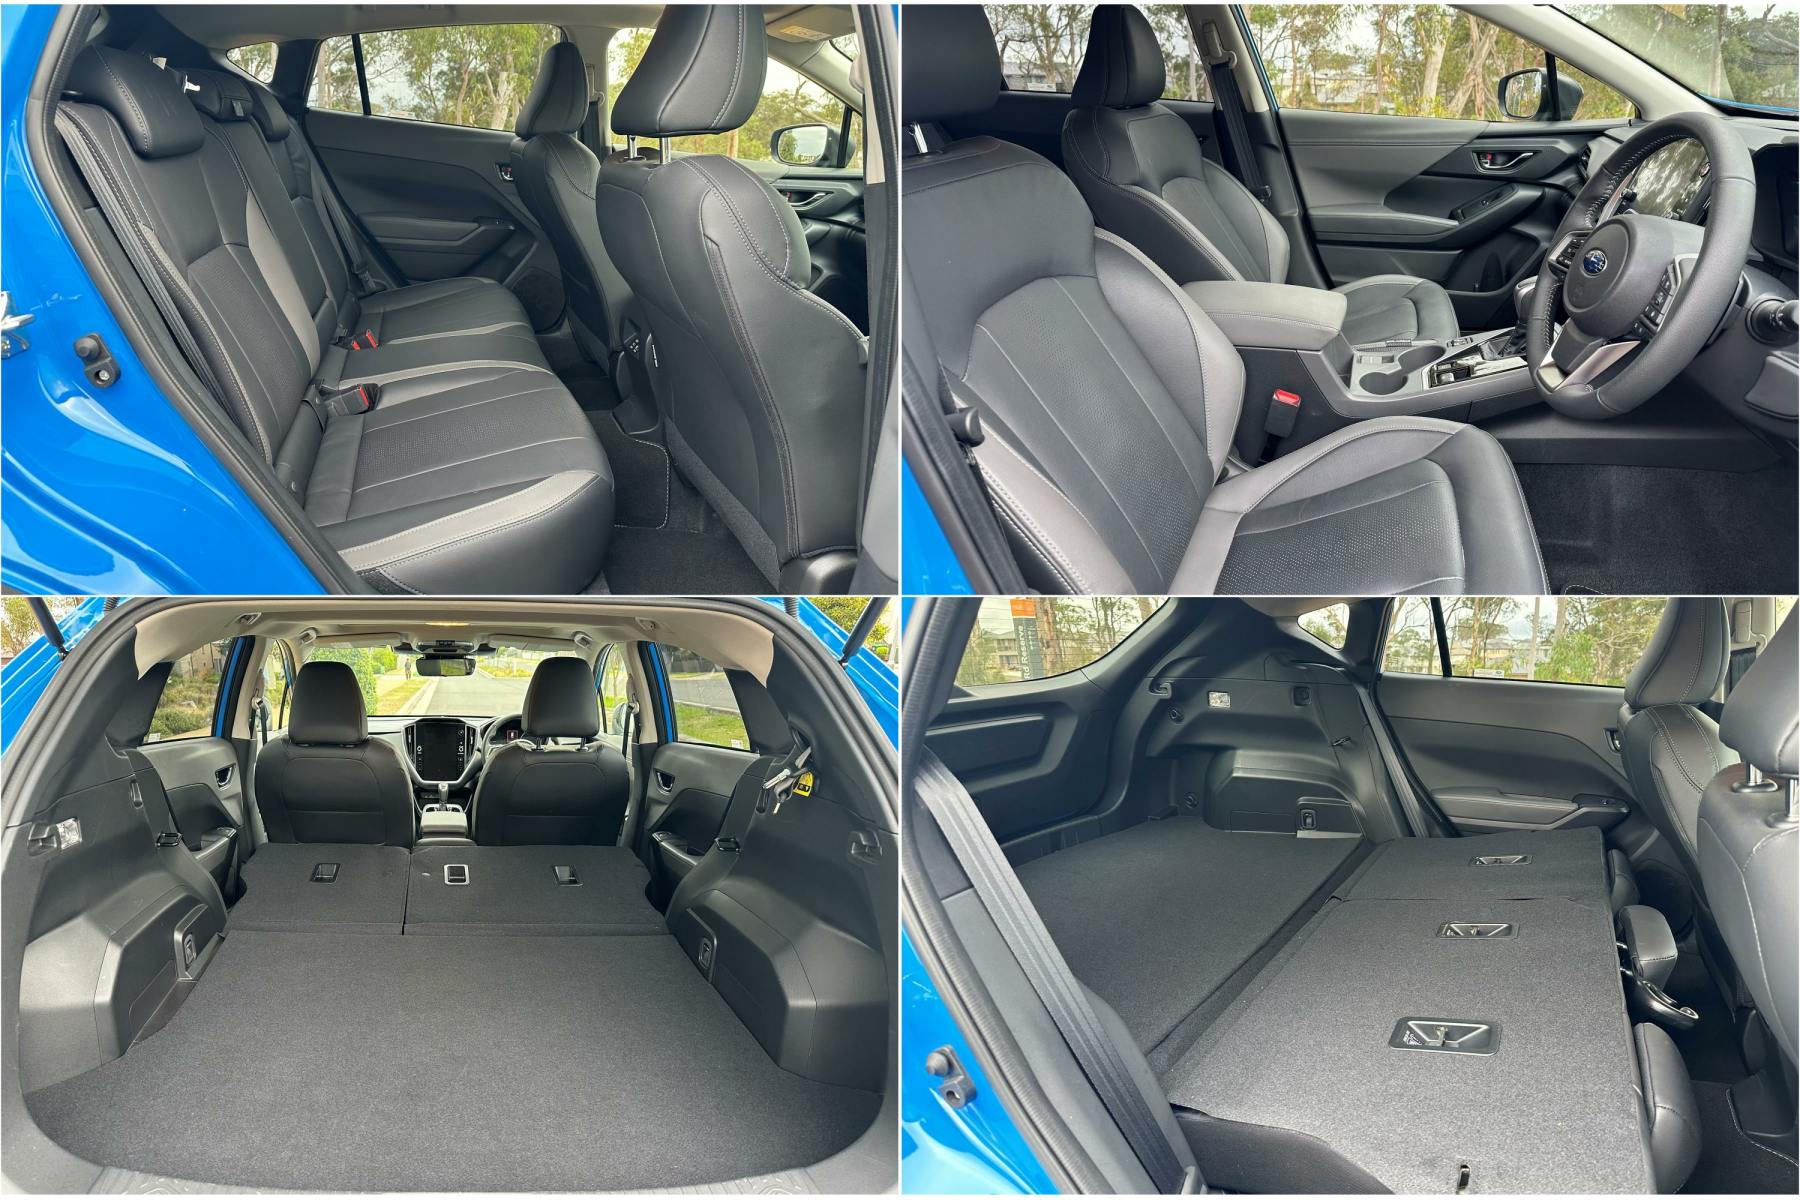 Subaru Crosstrek Hybrid S interior space compilation